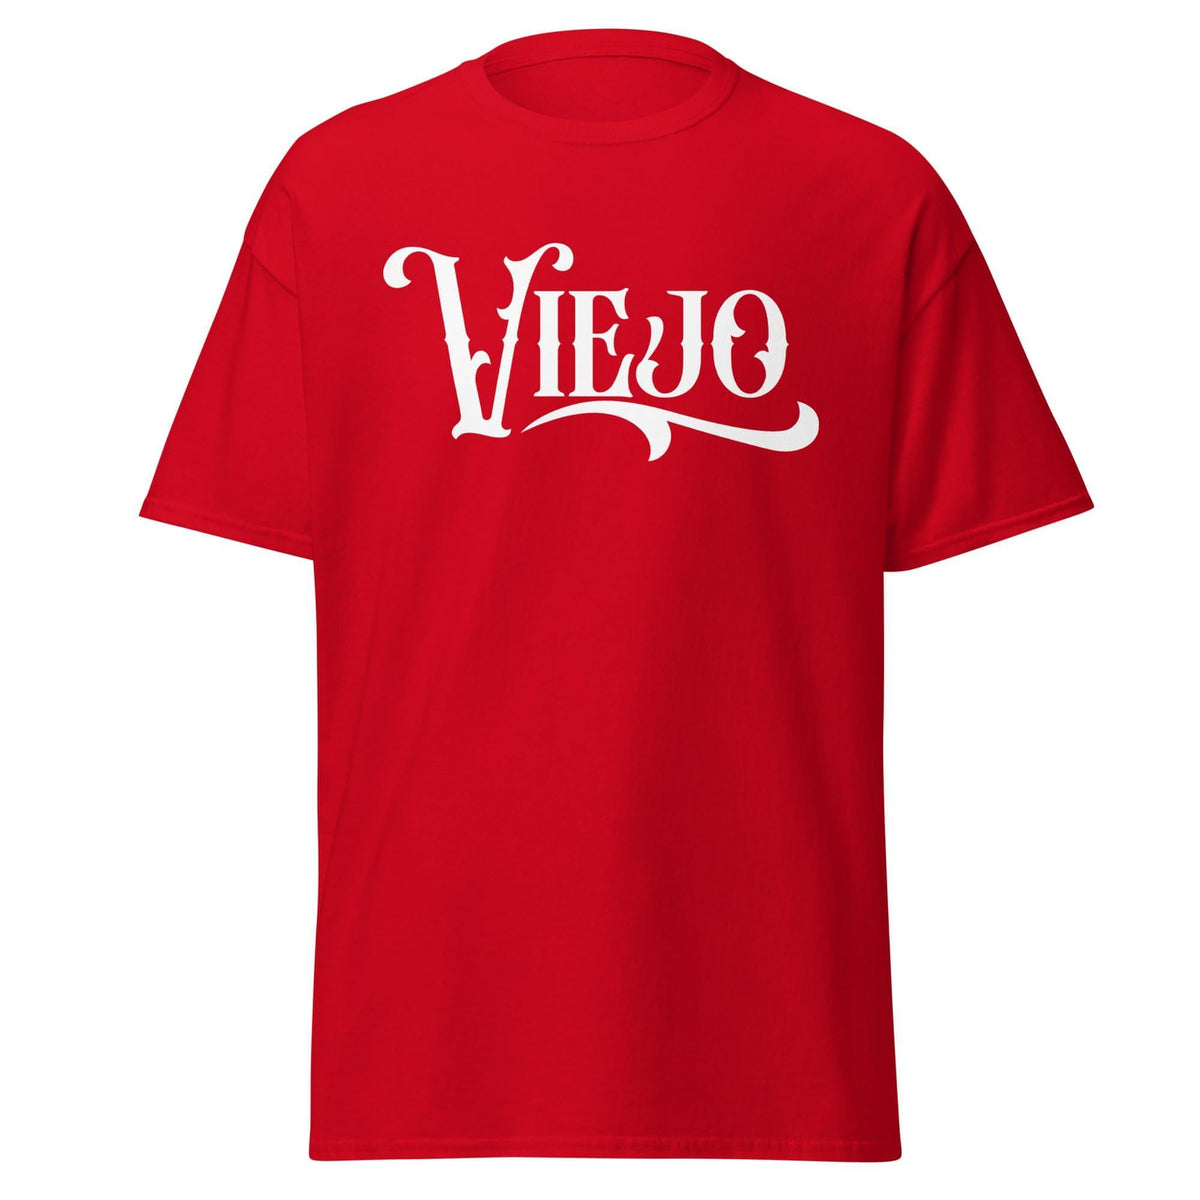 Viejo T-Shirt (Old Man)